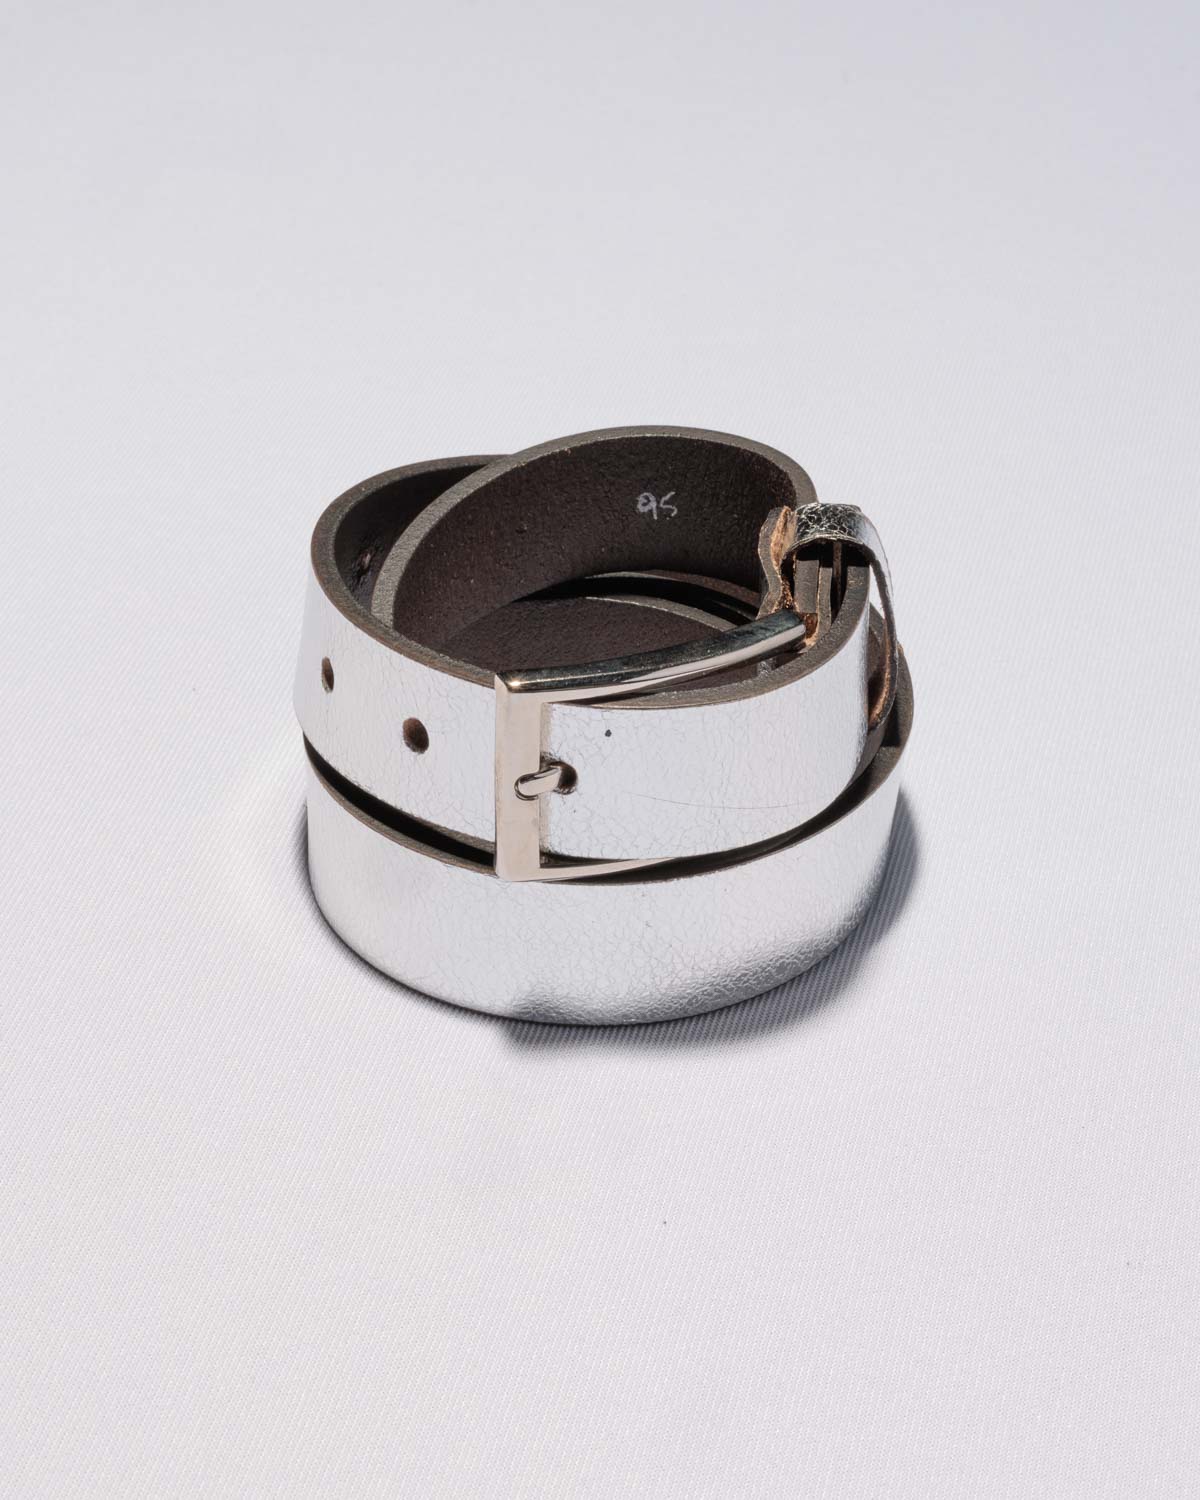 Hydestyle London Leather Belt in Metallic Silver